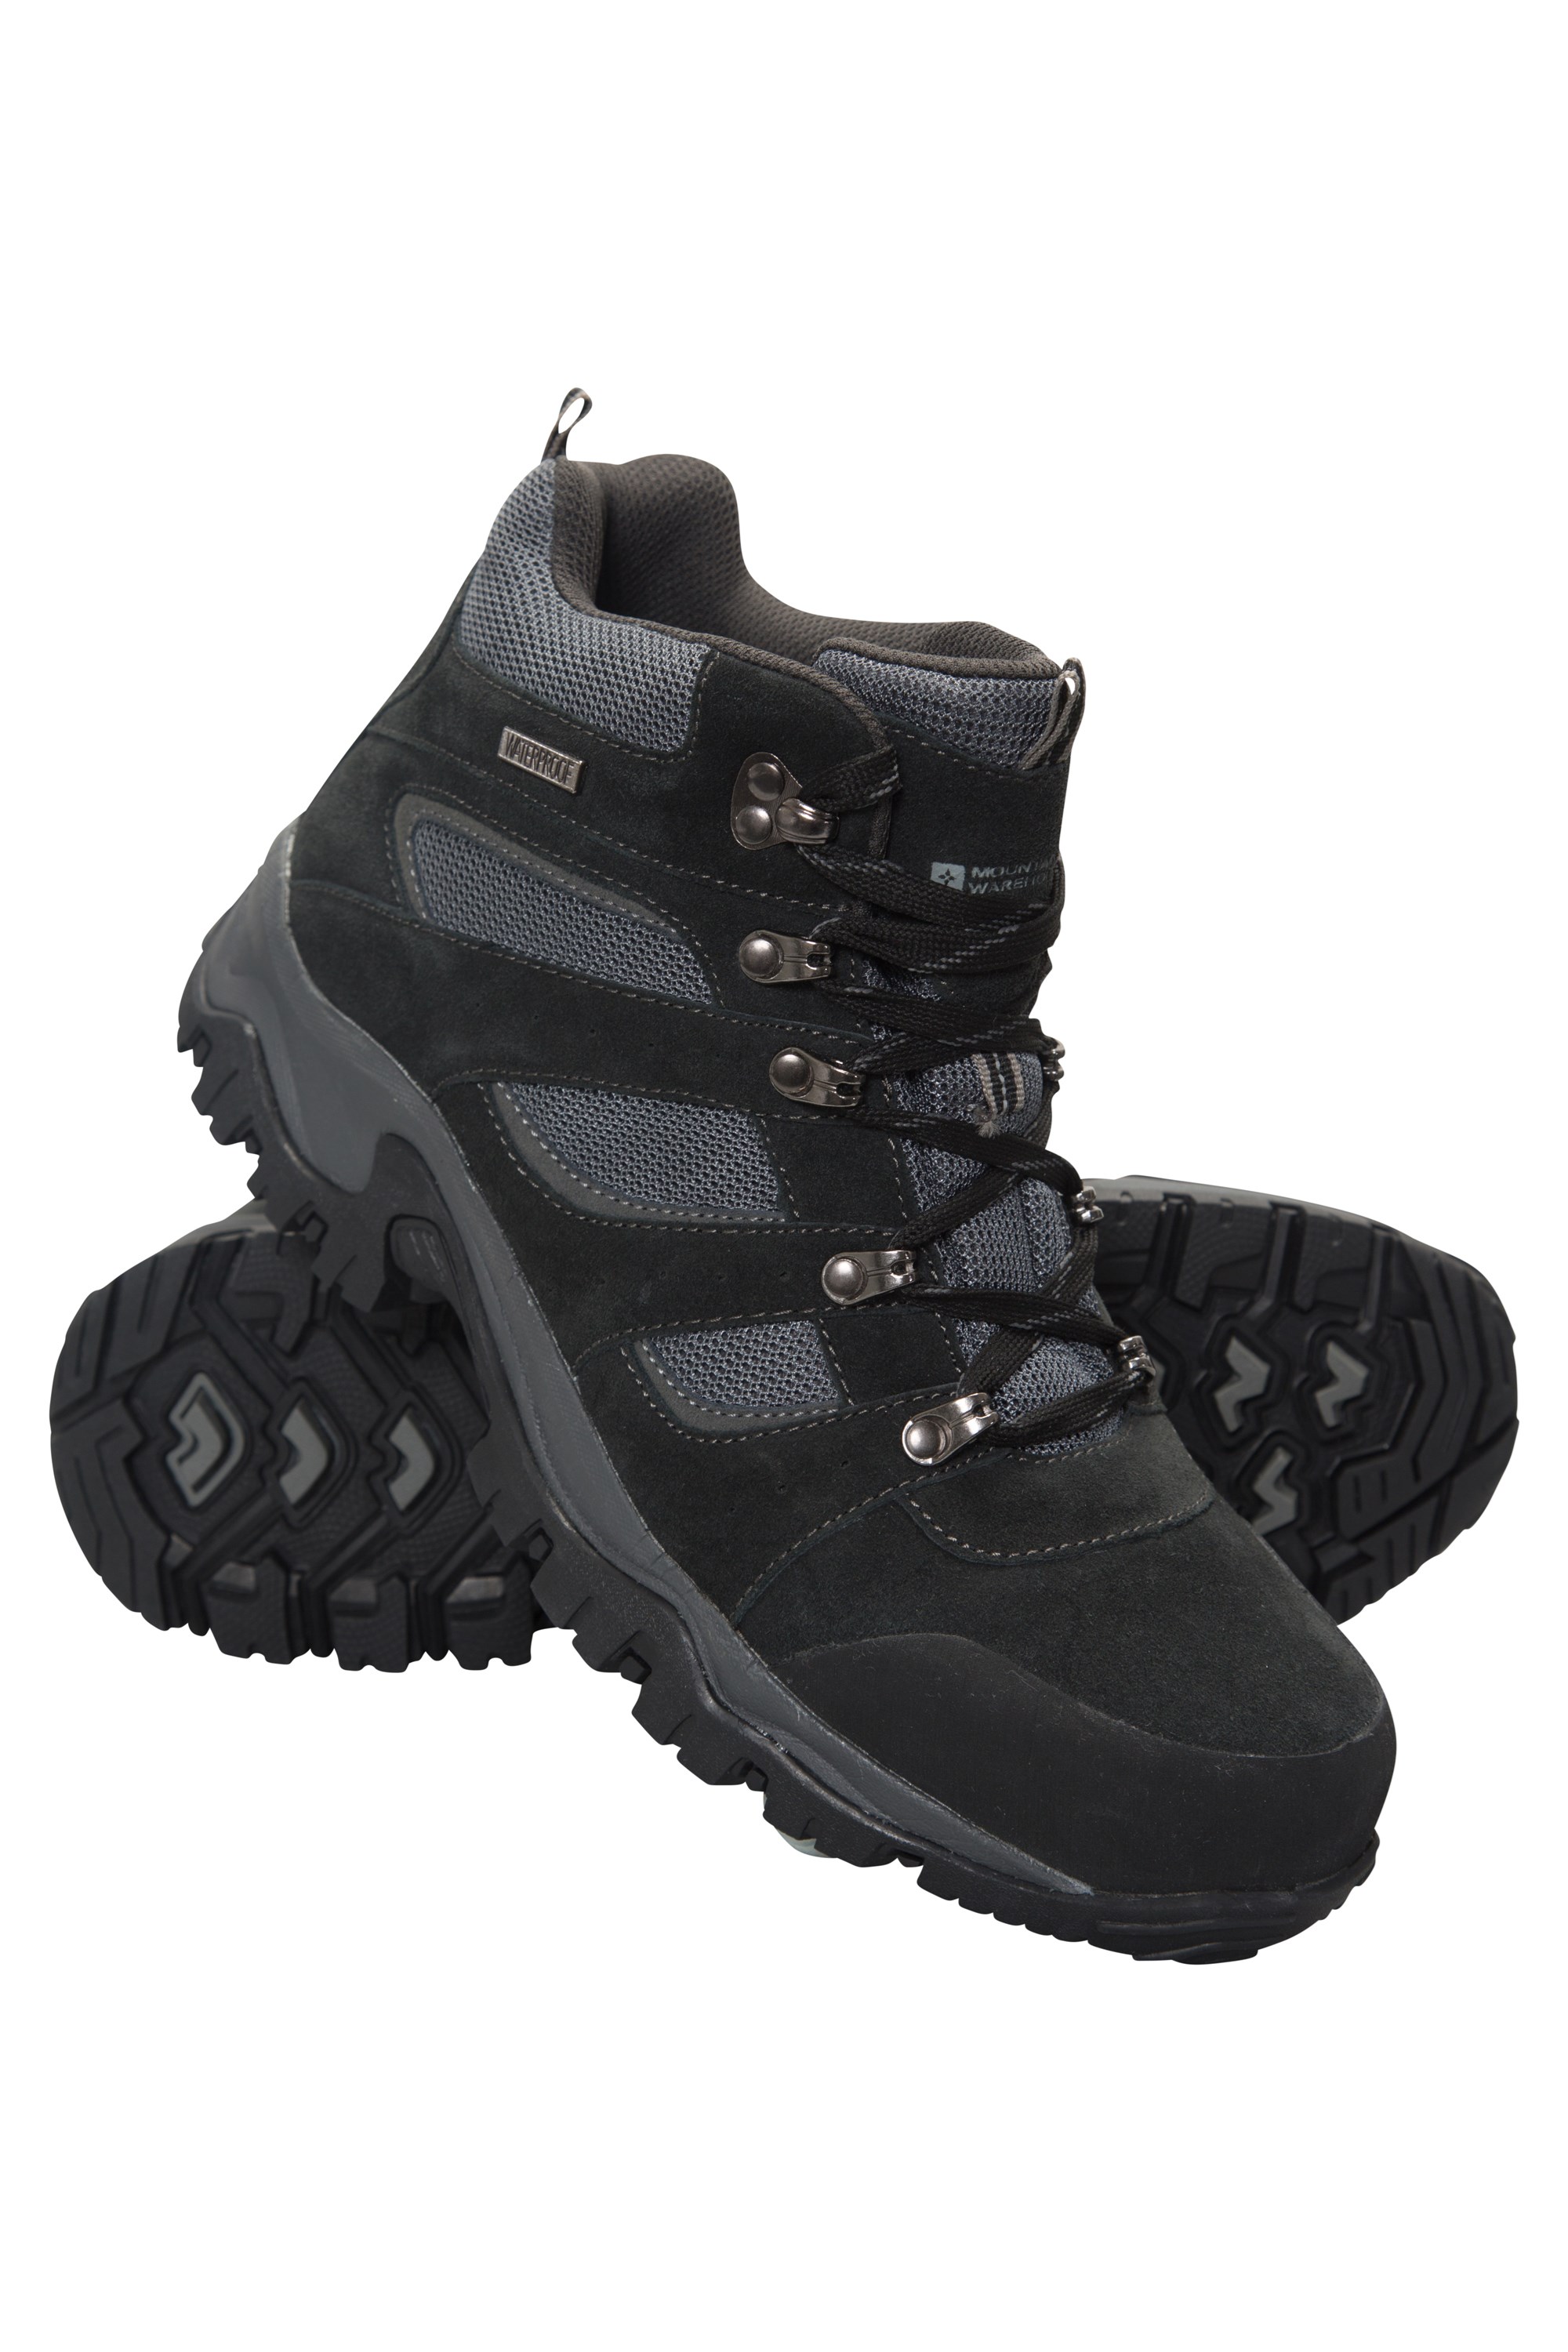 Mountain Warehouse Voyage Mens Waterproof Boots Black